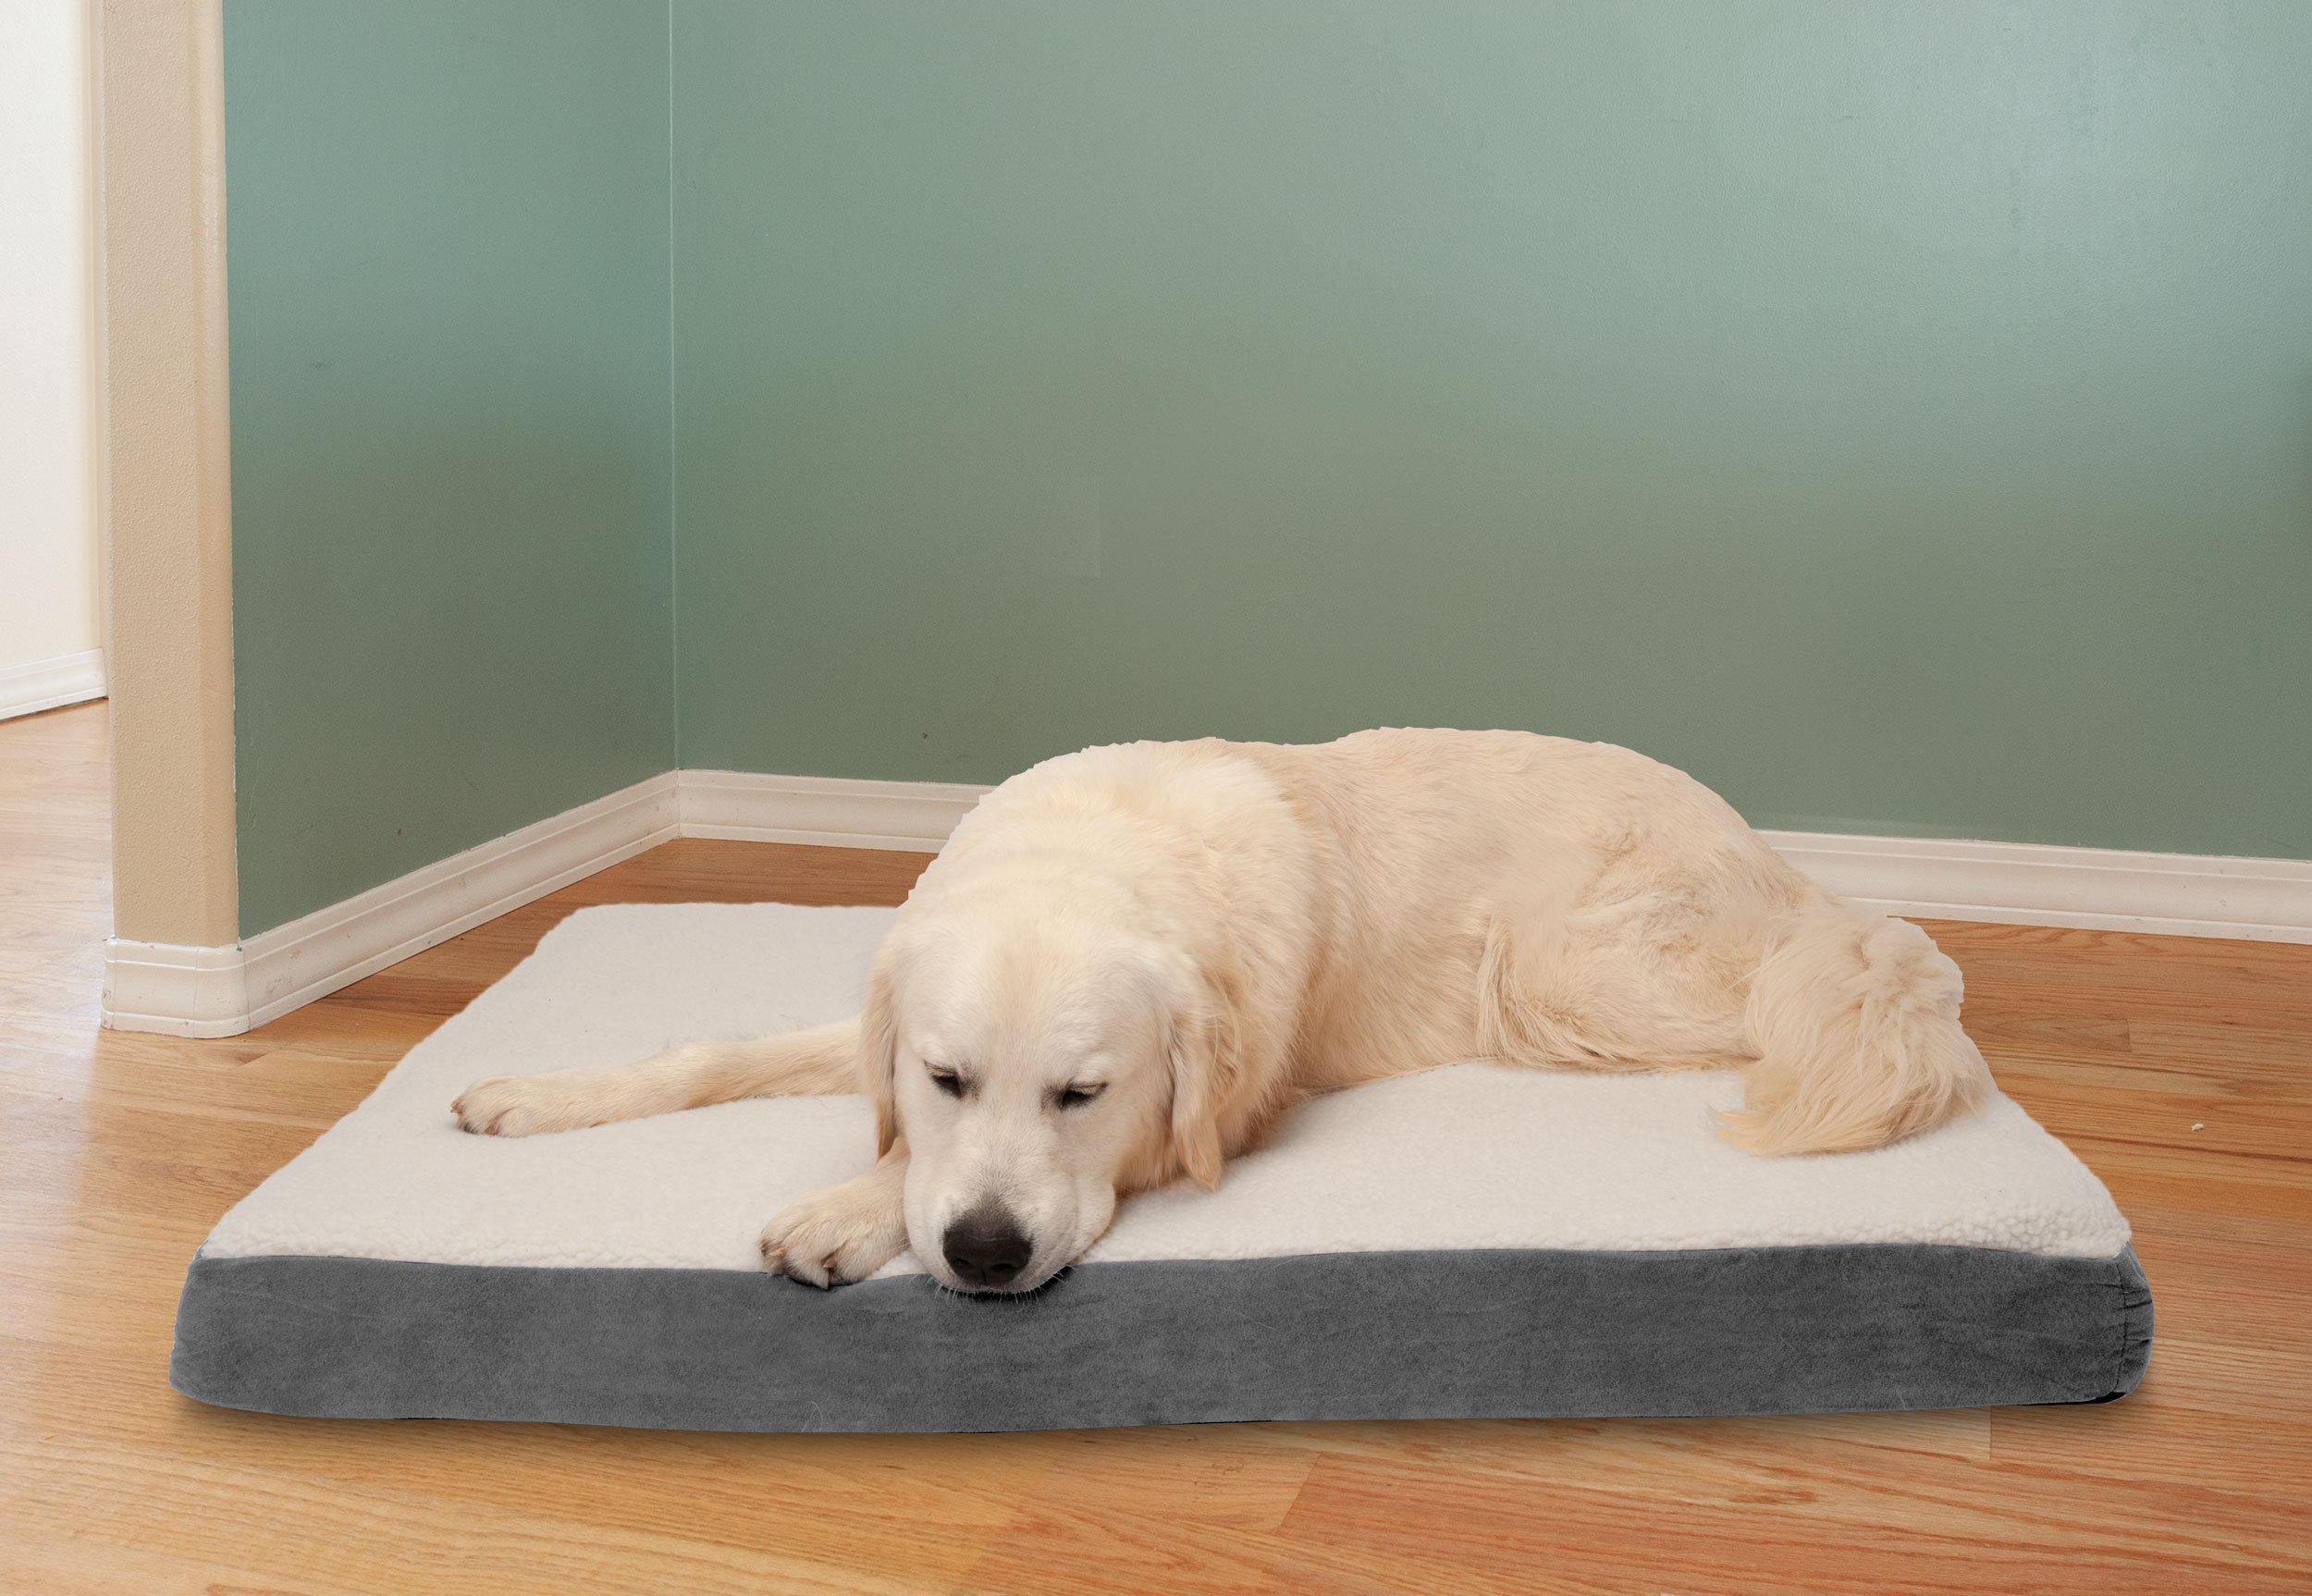 Shredded Memory Foam Fill Refill for Pillow, Bean Bag, Dog Pet Bed Cushion  20lbs